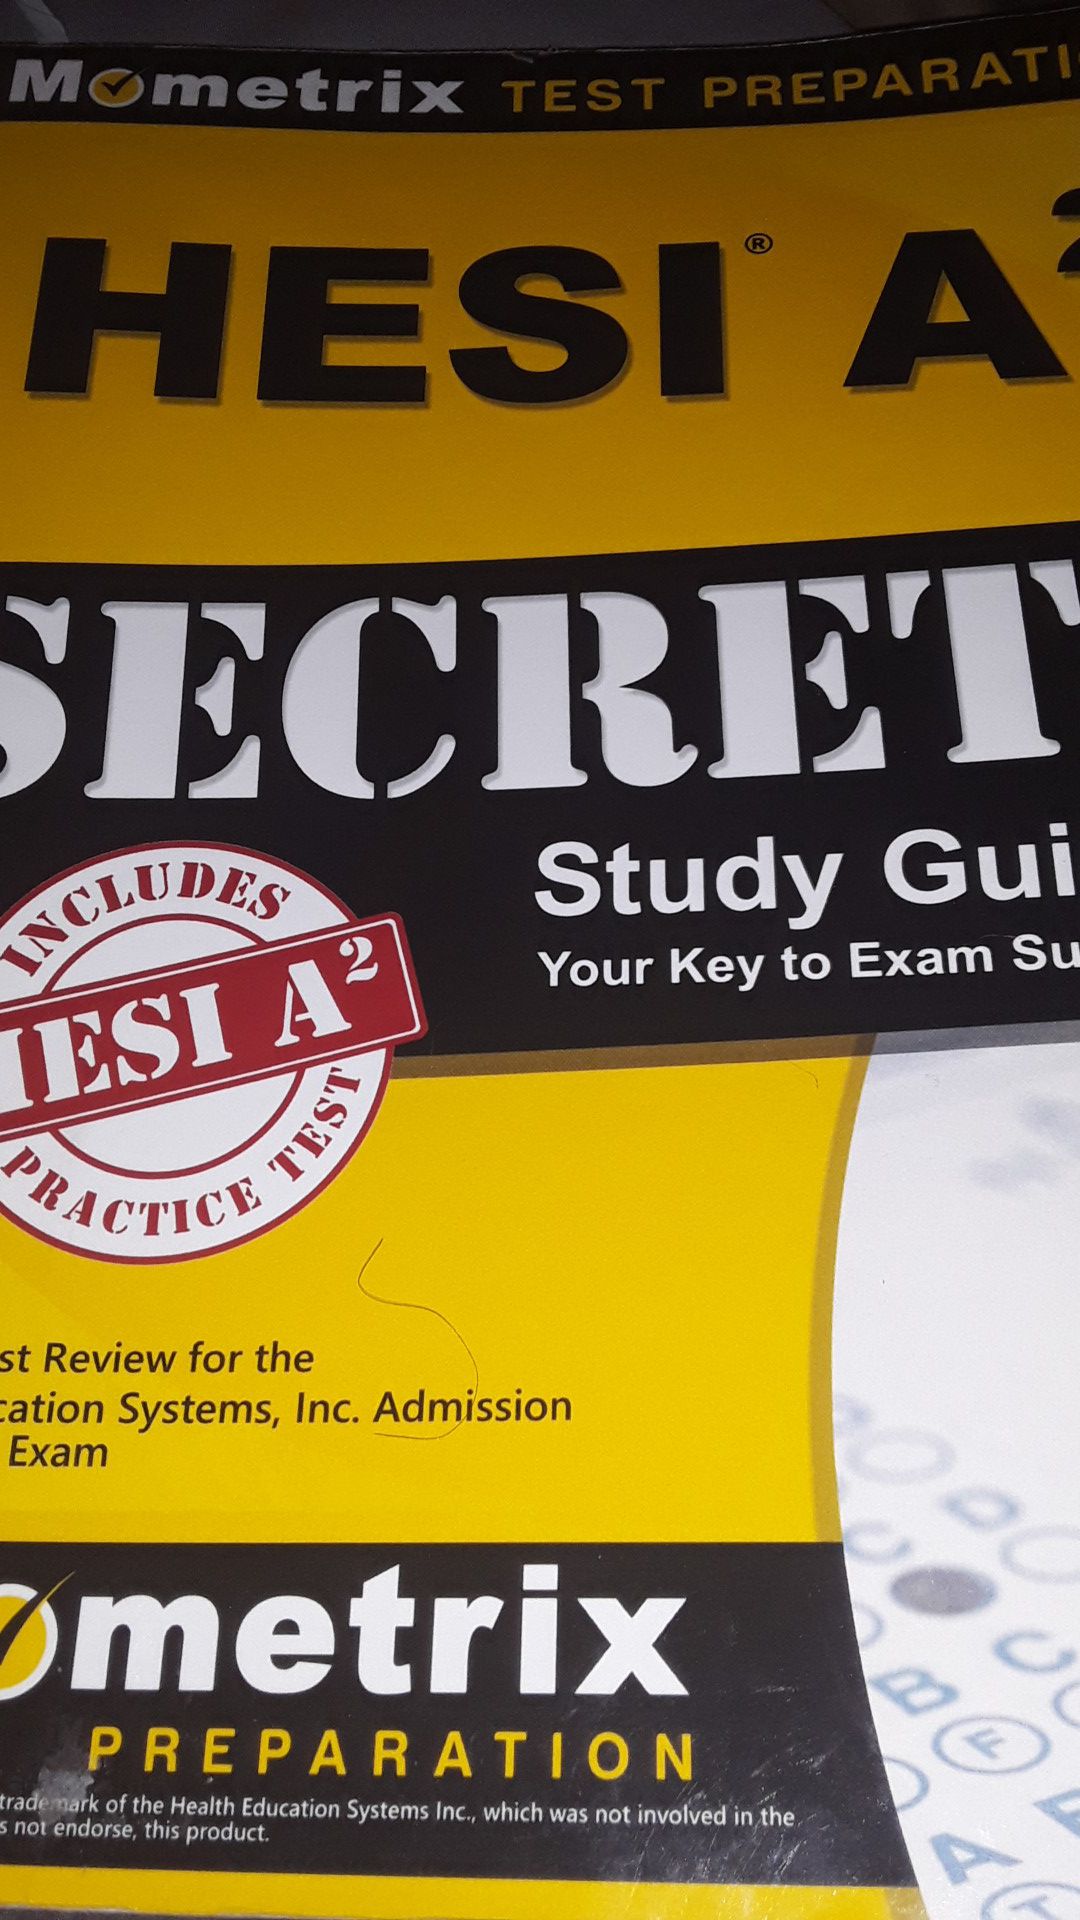 2 Hesi A 2 secret study guides